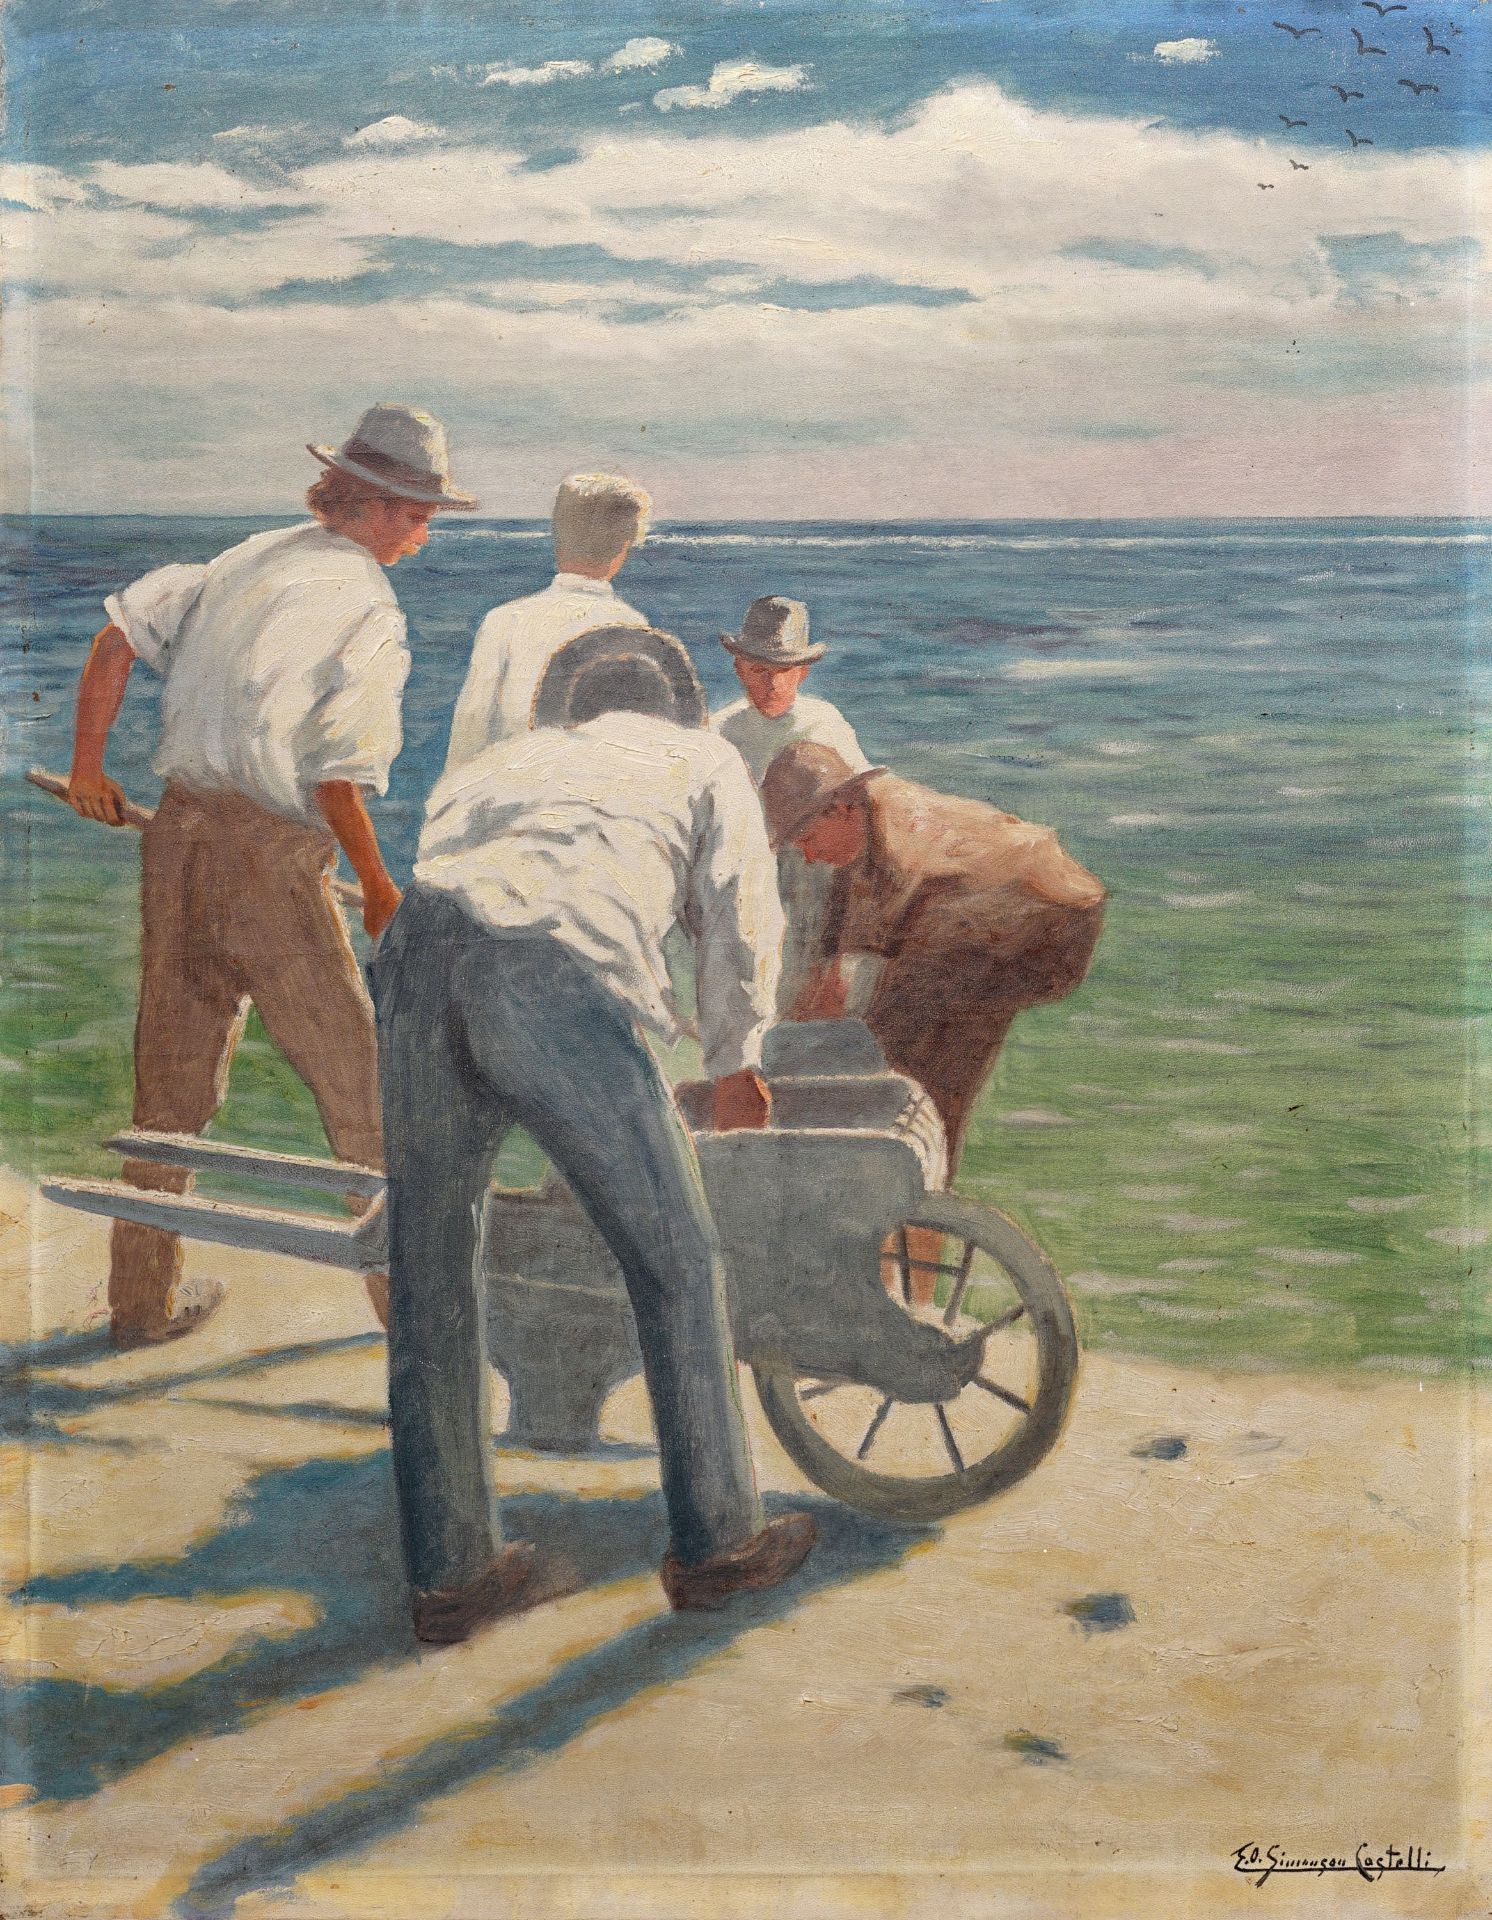 Ernst Oskar Simonson-Castelli, Männer mit Handkarren am Meeresstrand. Um 1900.